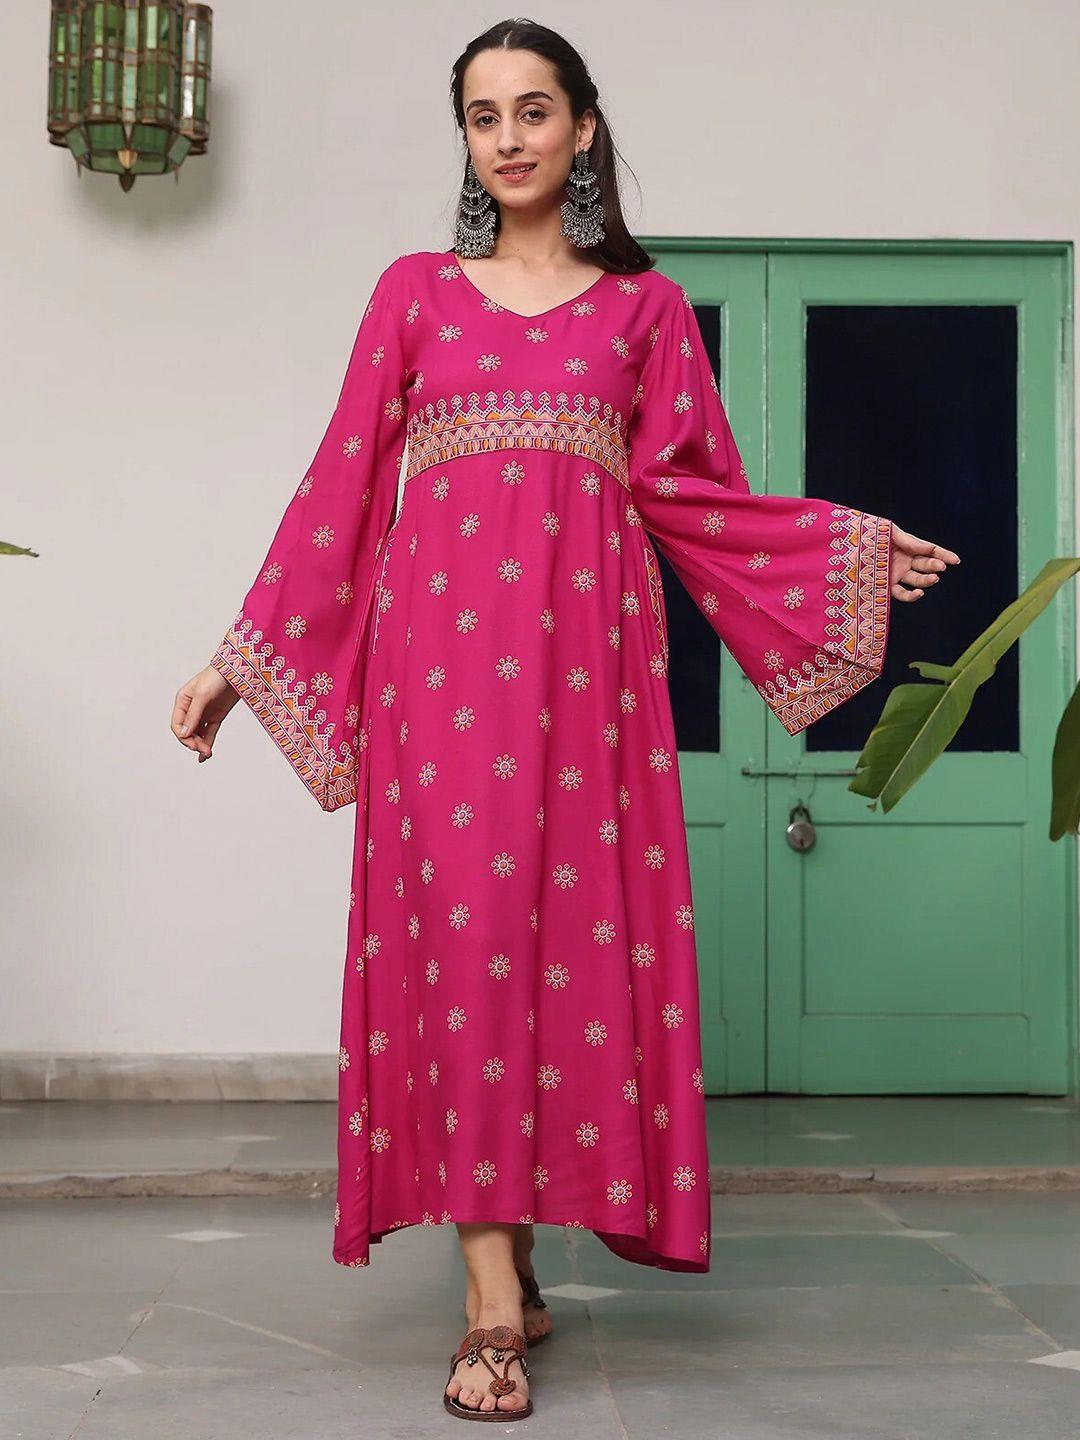 rustorange pink ethnic motifs maxi dress